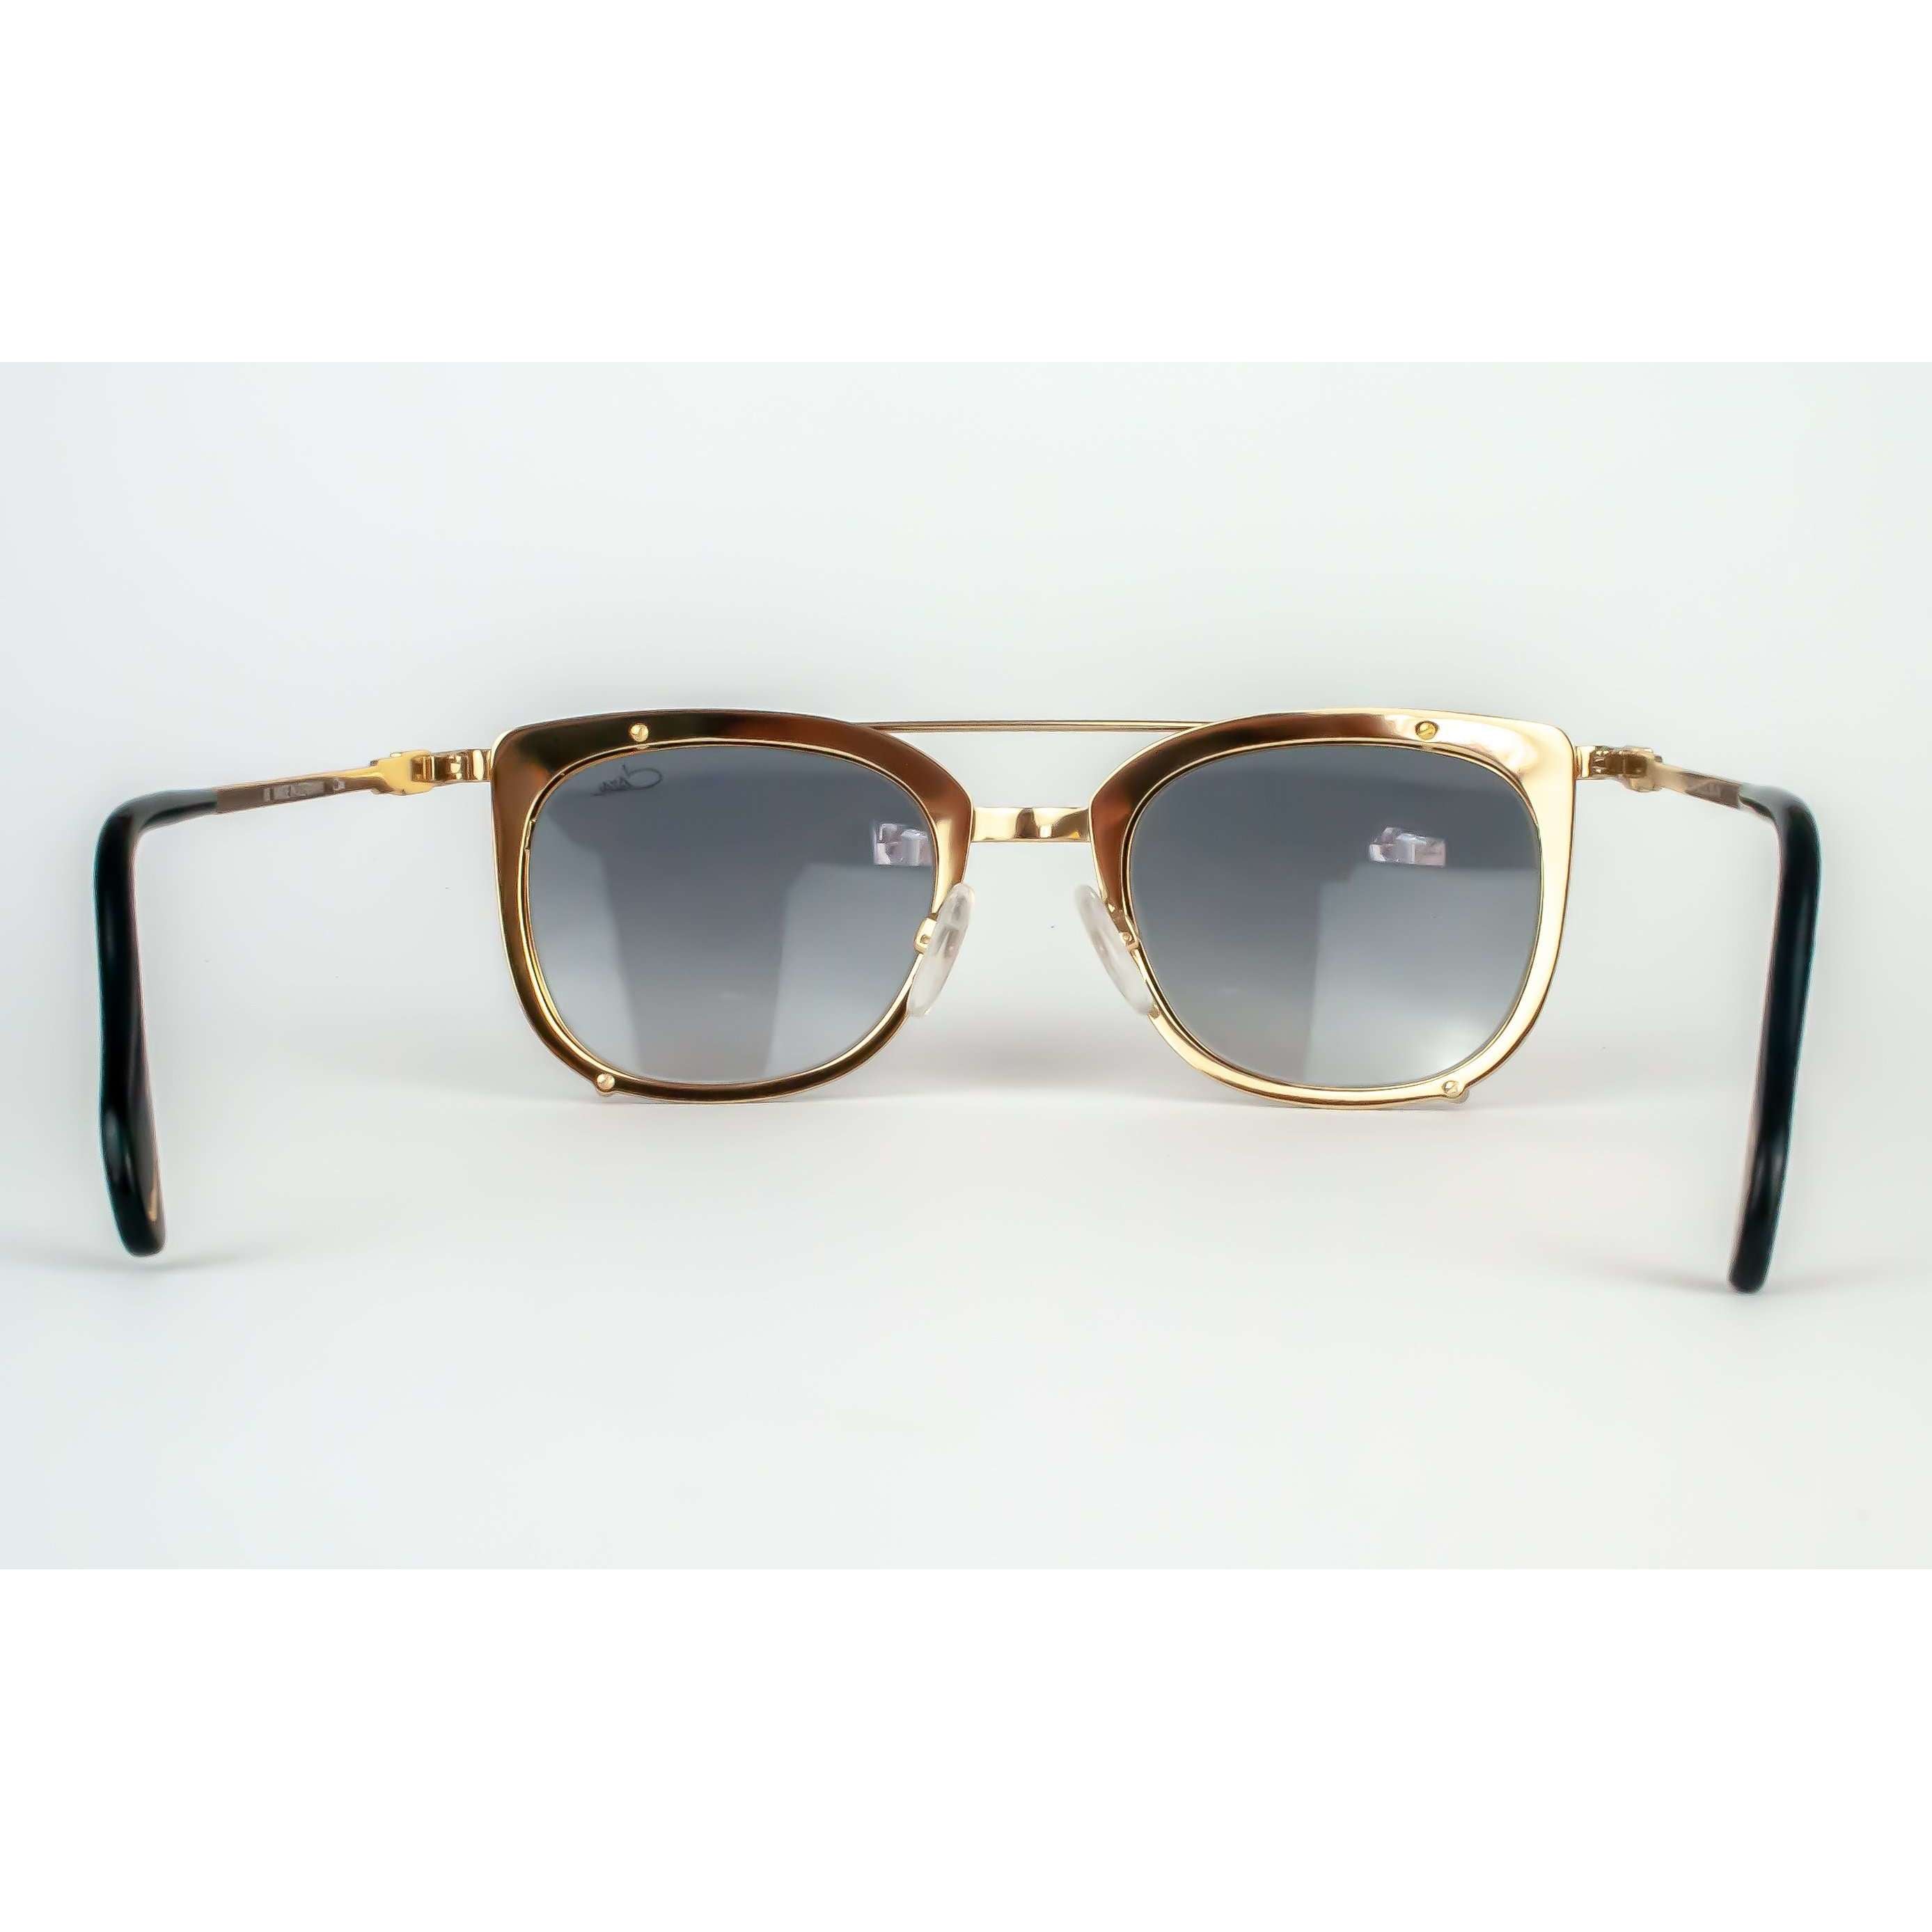 Cazal Model 9077 Colour 001 Black Cat Eye Sunglasses